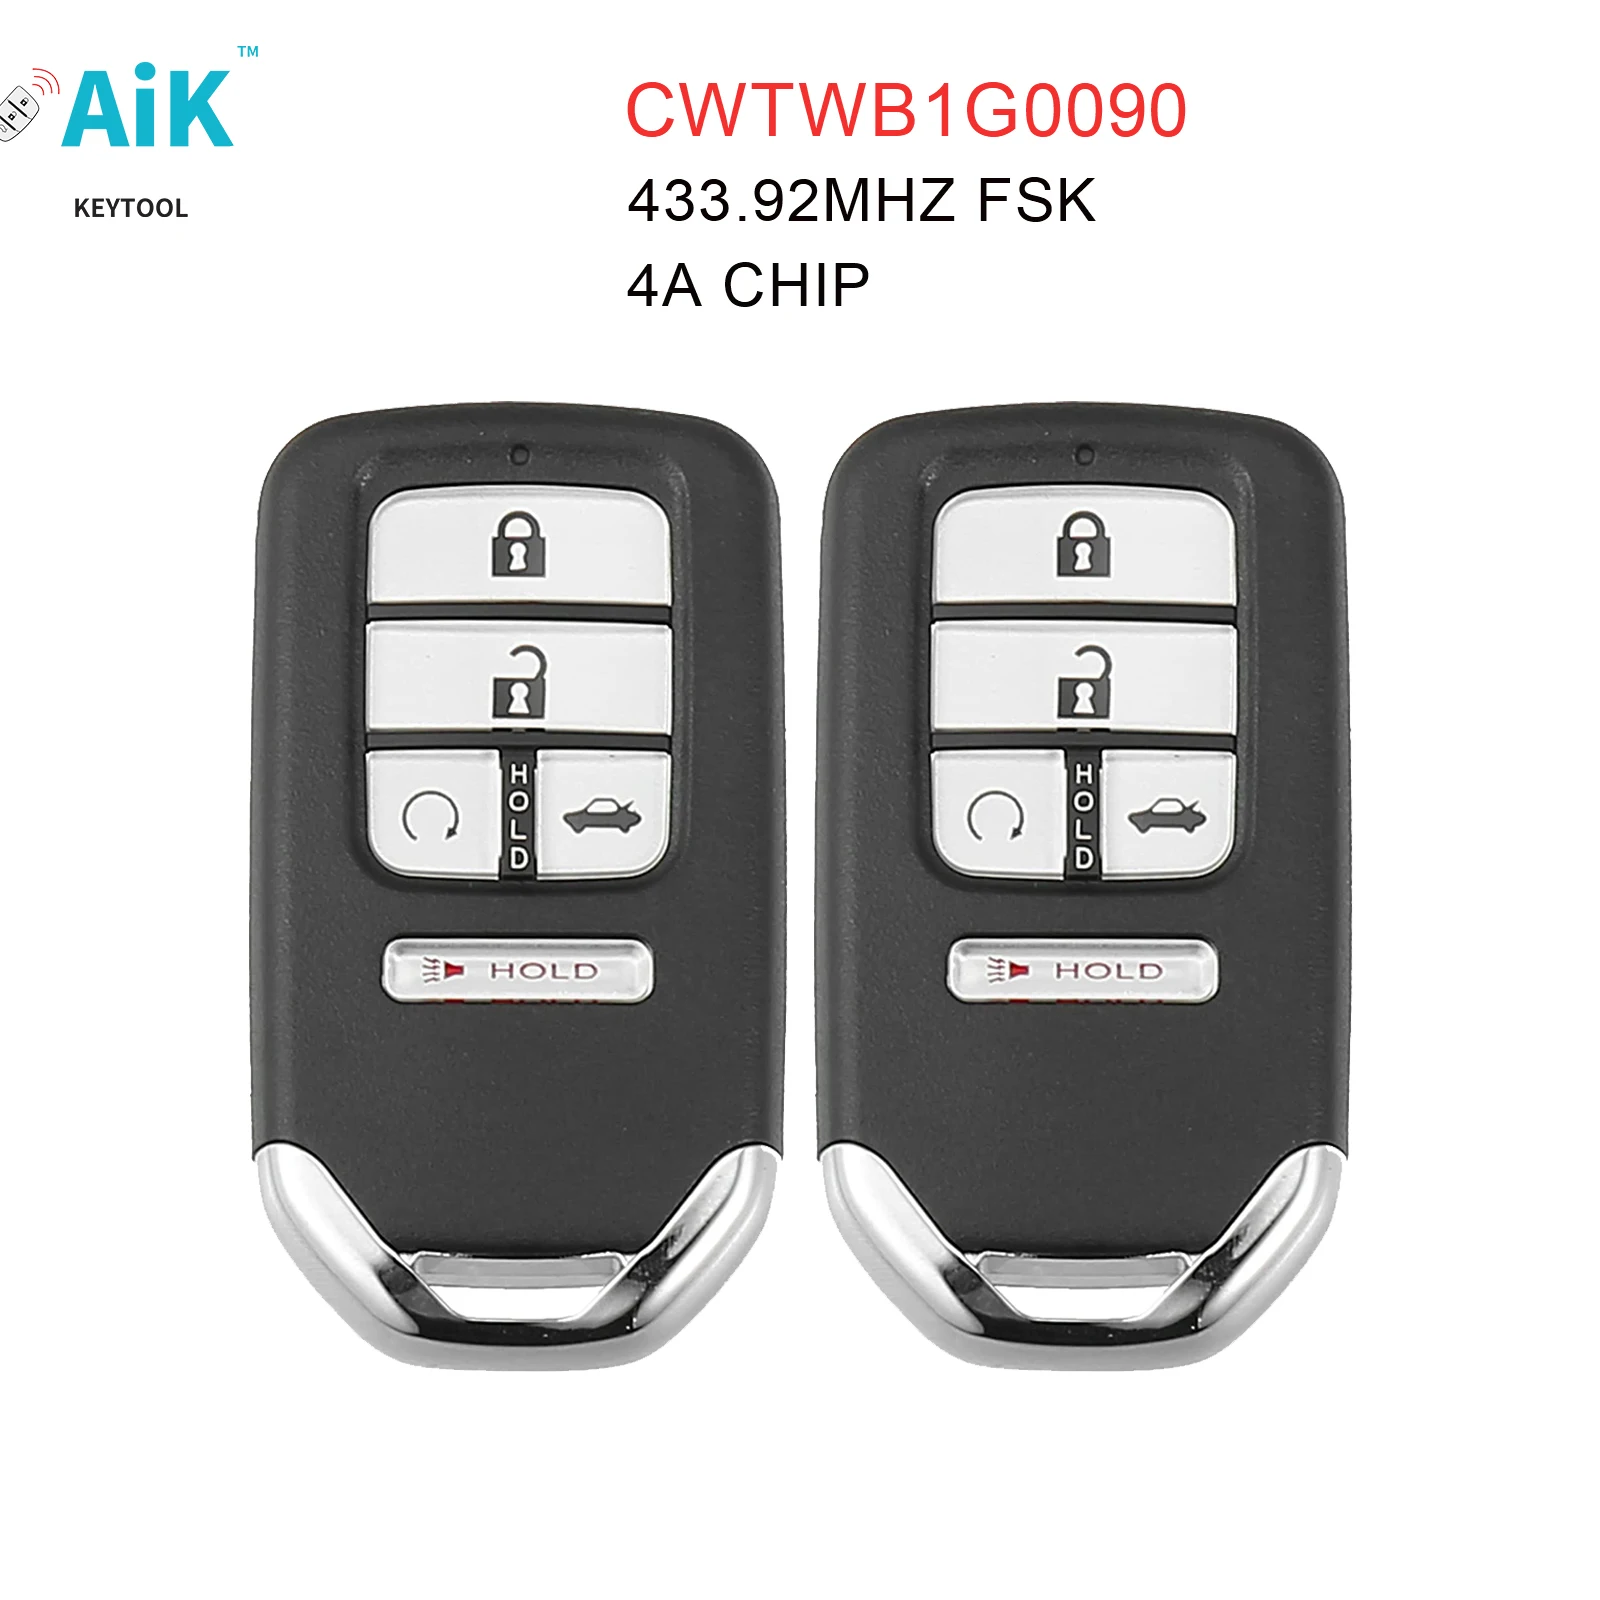 

AIKKEY Pair Keyless Prox Smart Card Remote Car Key Fob for Honda Accord 2018 2019 2020 433MHz 4A Chip 5 Button CWTWB1G0090